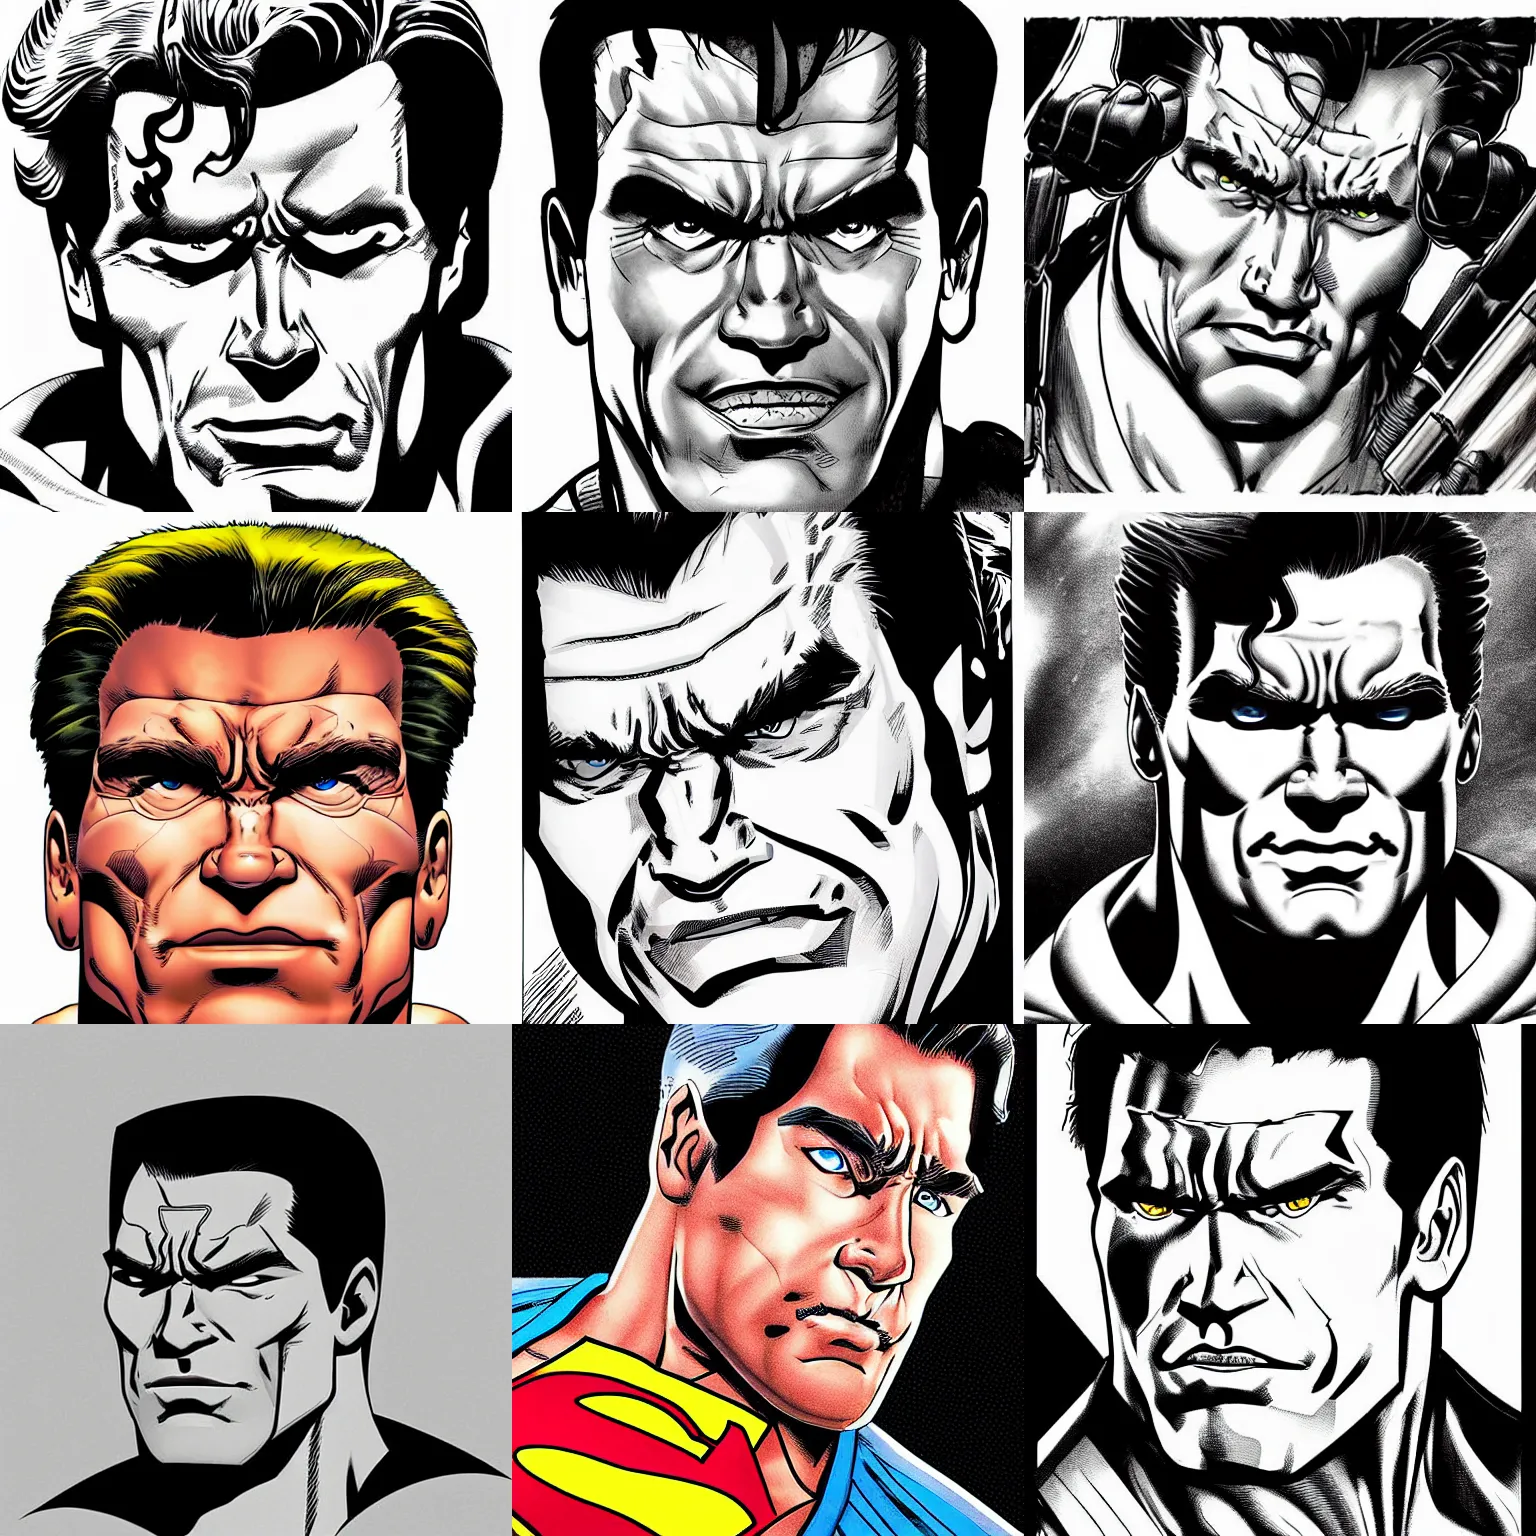 Prompt: schwarzenegger!!! jim lee!!! macro face calm shot!! flat ink sketch by jim lee face close up headshot superman costume in the style of jim lee, x - men superhero comic book character by jim lee